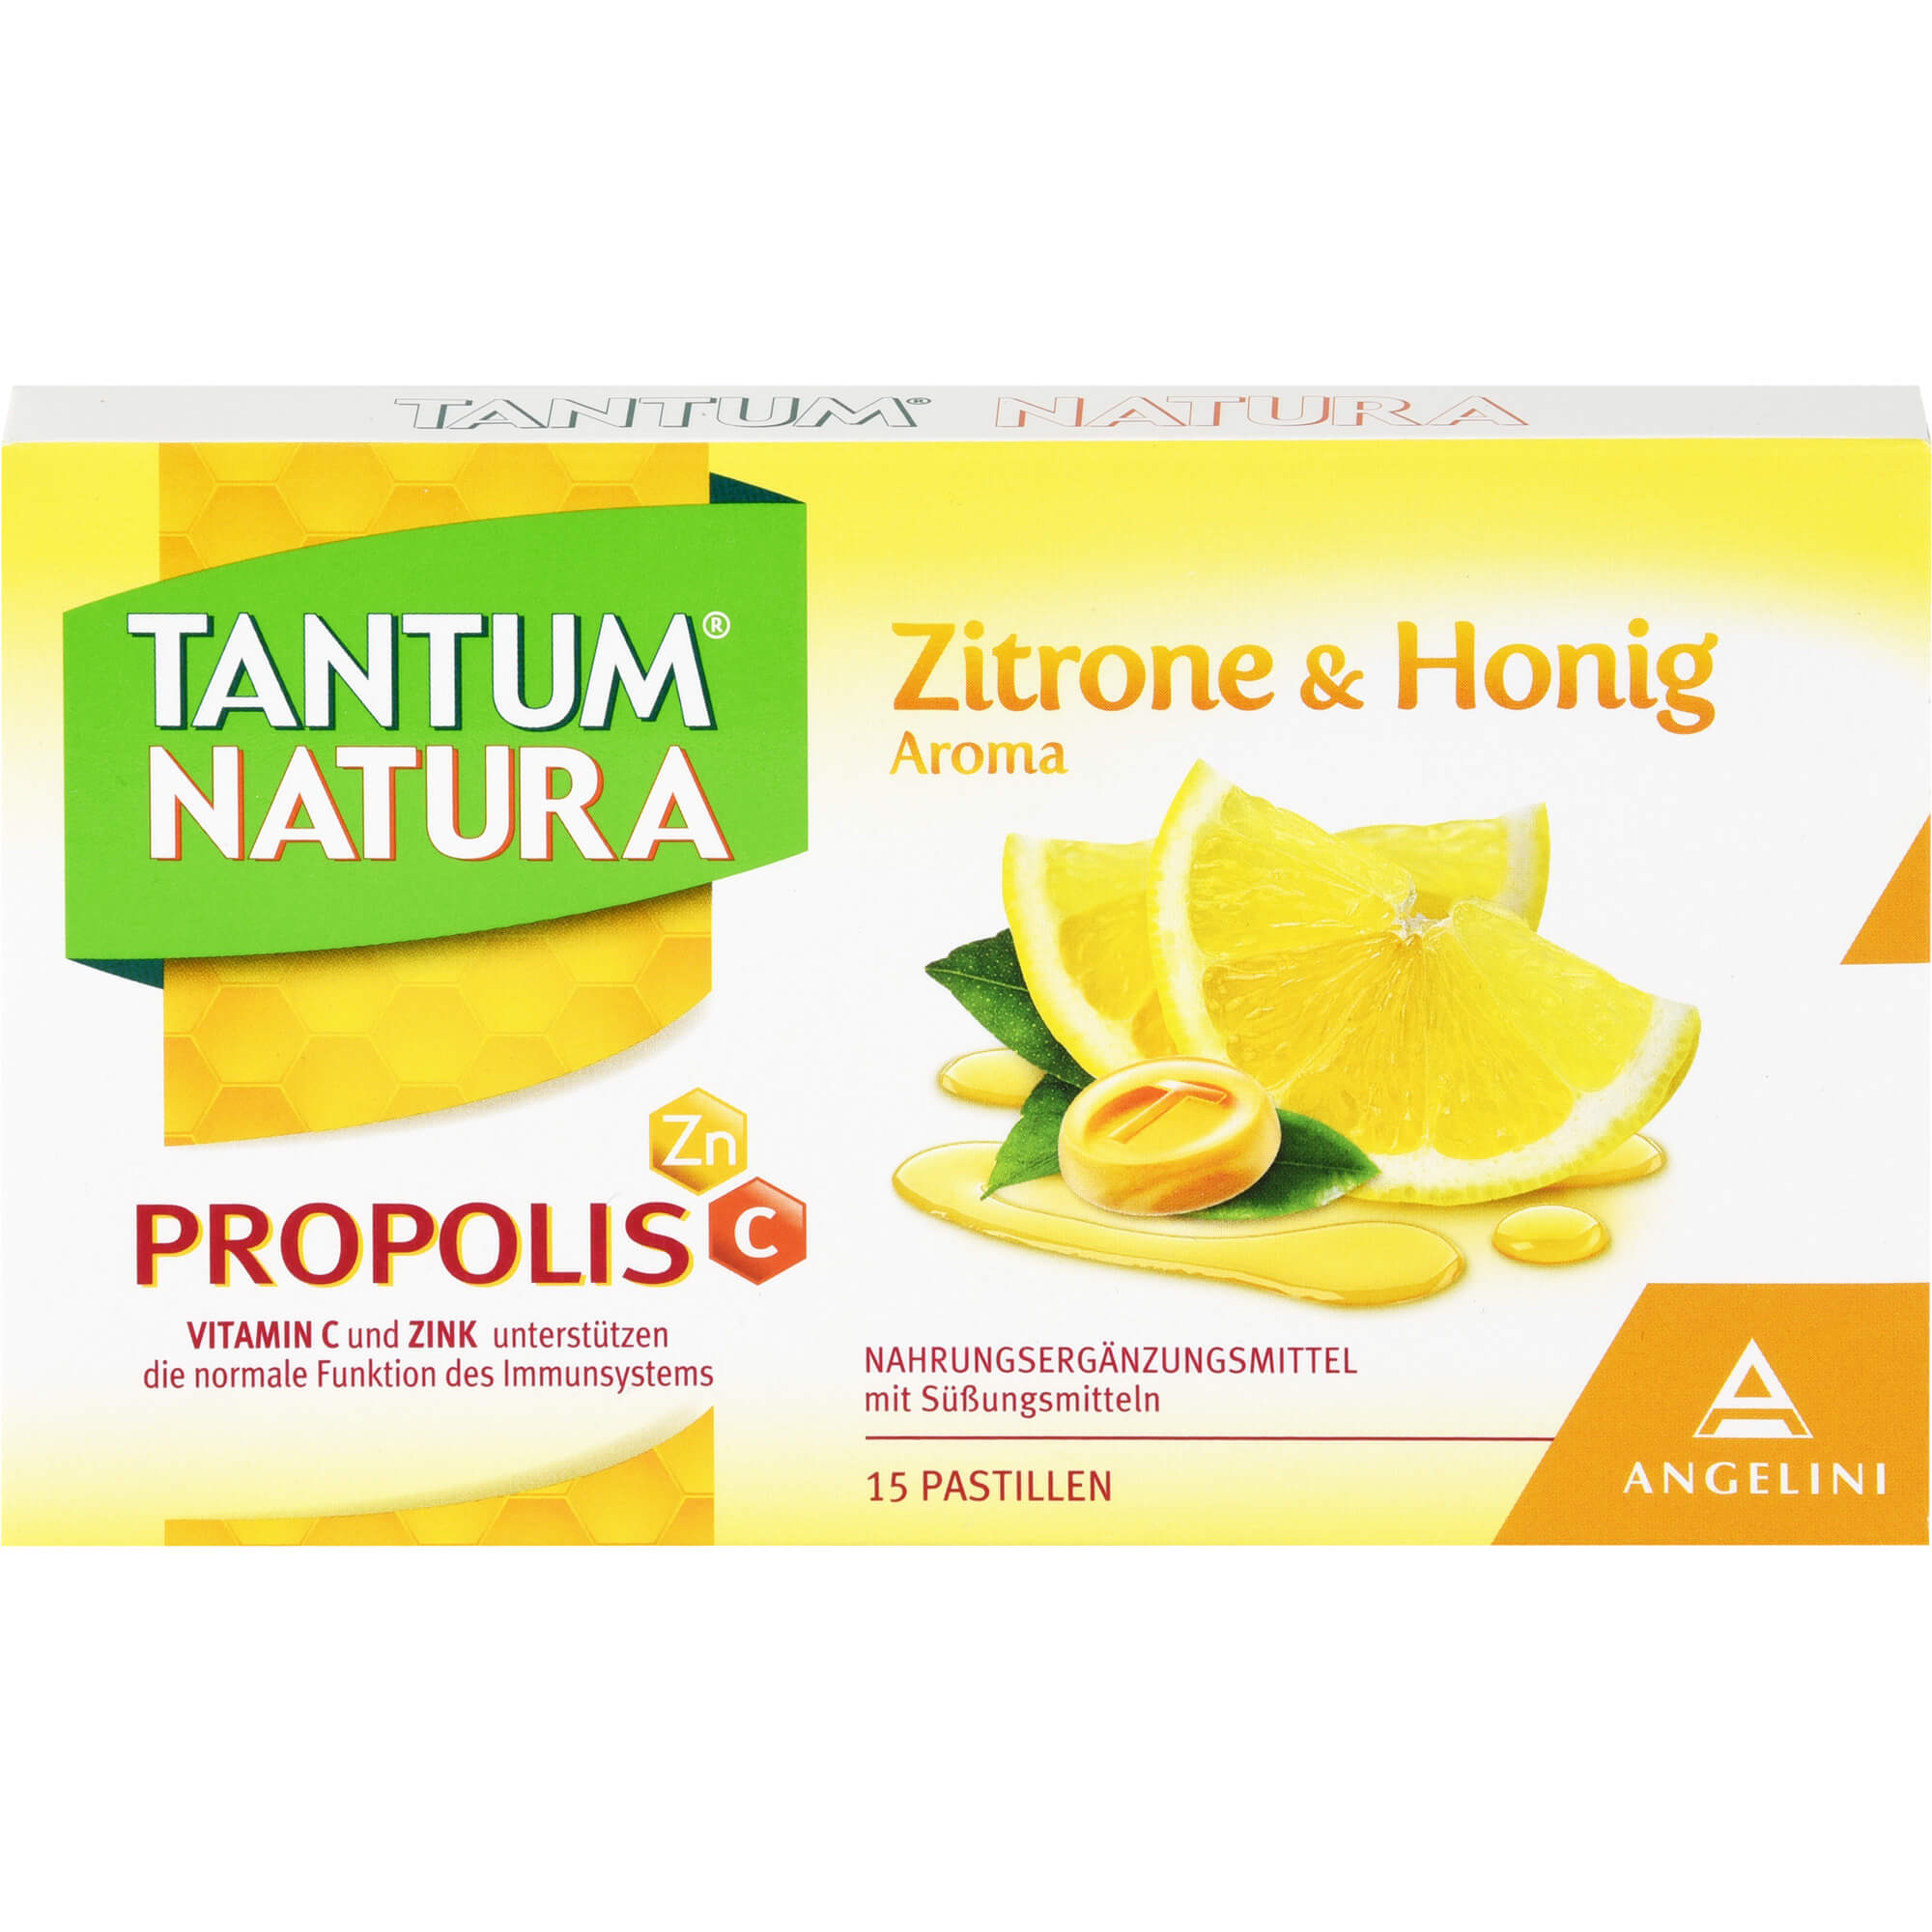 TANTUM NATURA Propolis mit Zitrone & Honig Aroma